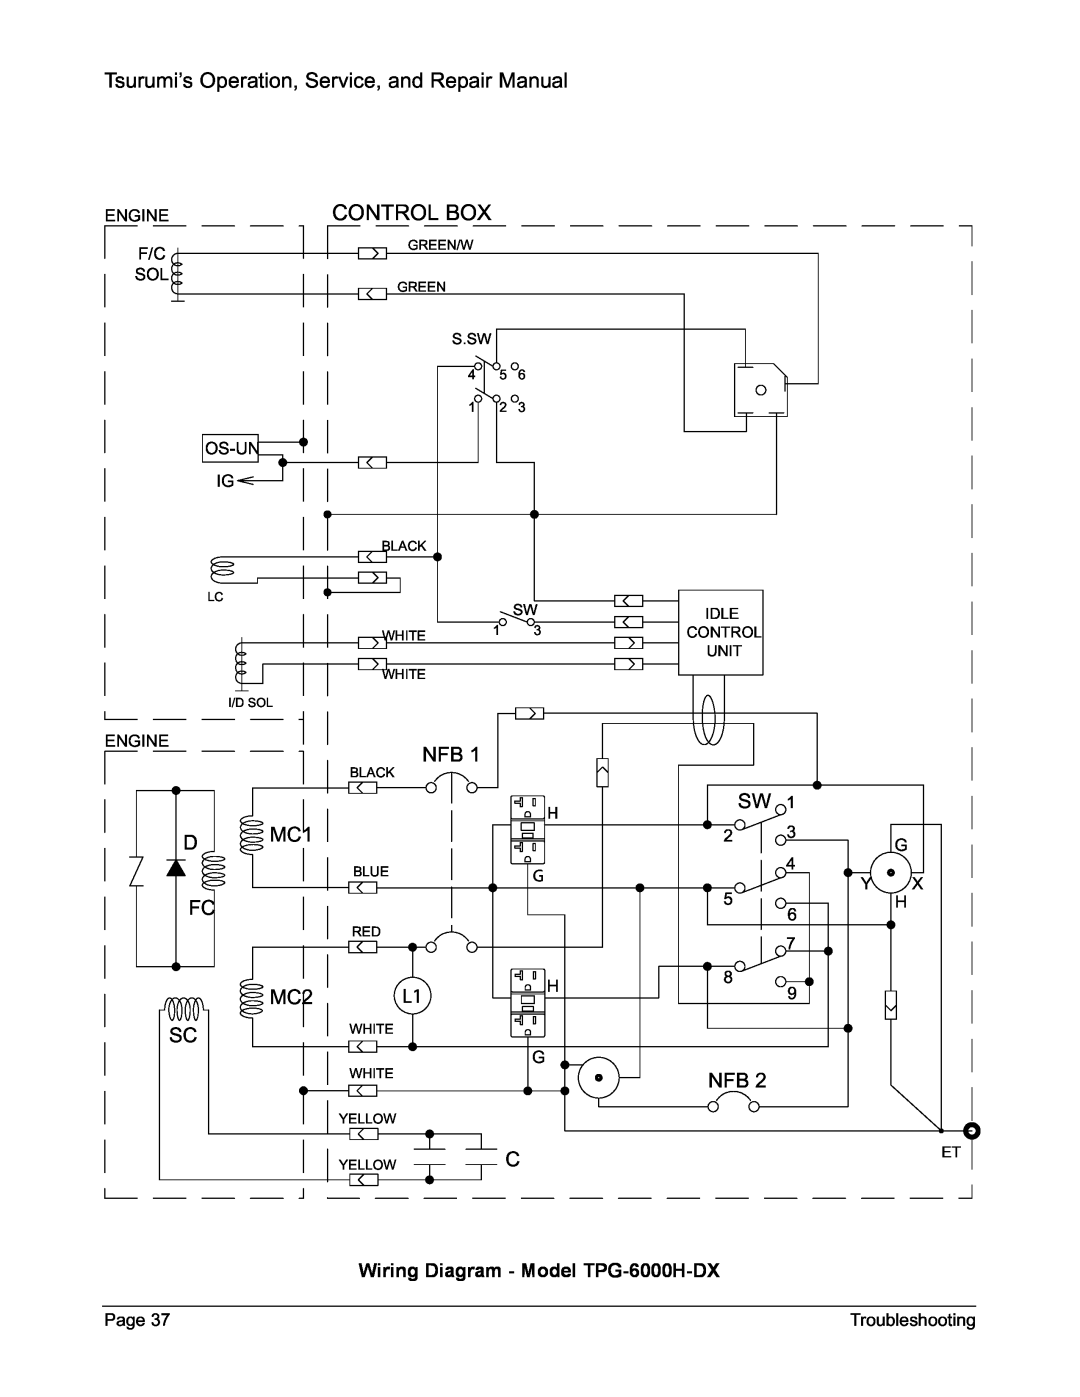 Honda Power Equipment TPG-2900H-DX, TPG-7000H-DXE, TPG-4300H-DX manual Control Box, Wiring Diagram - Model TPG-6000H-DX 